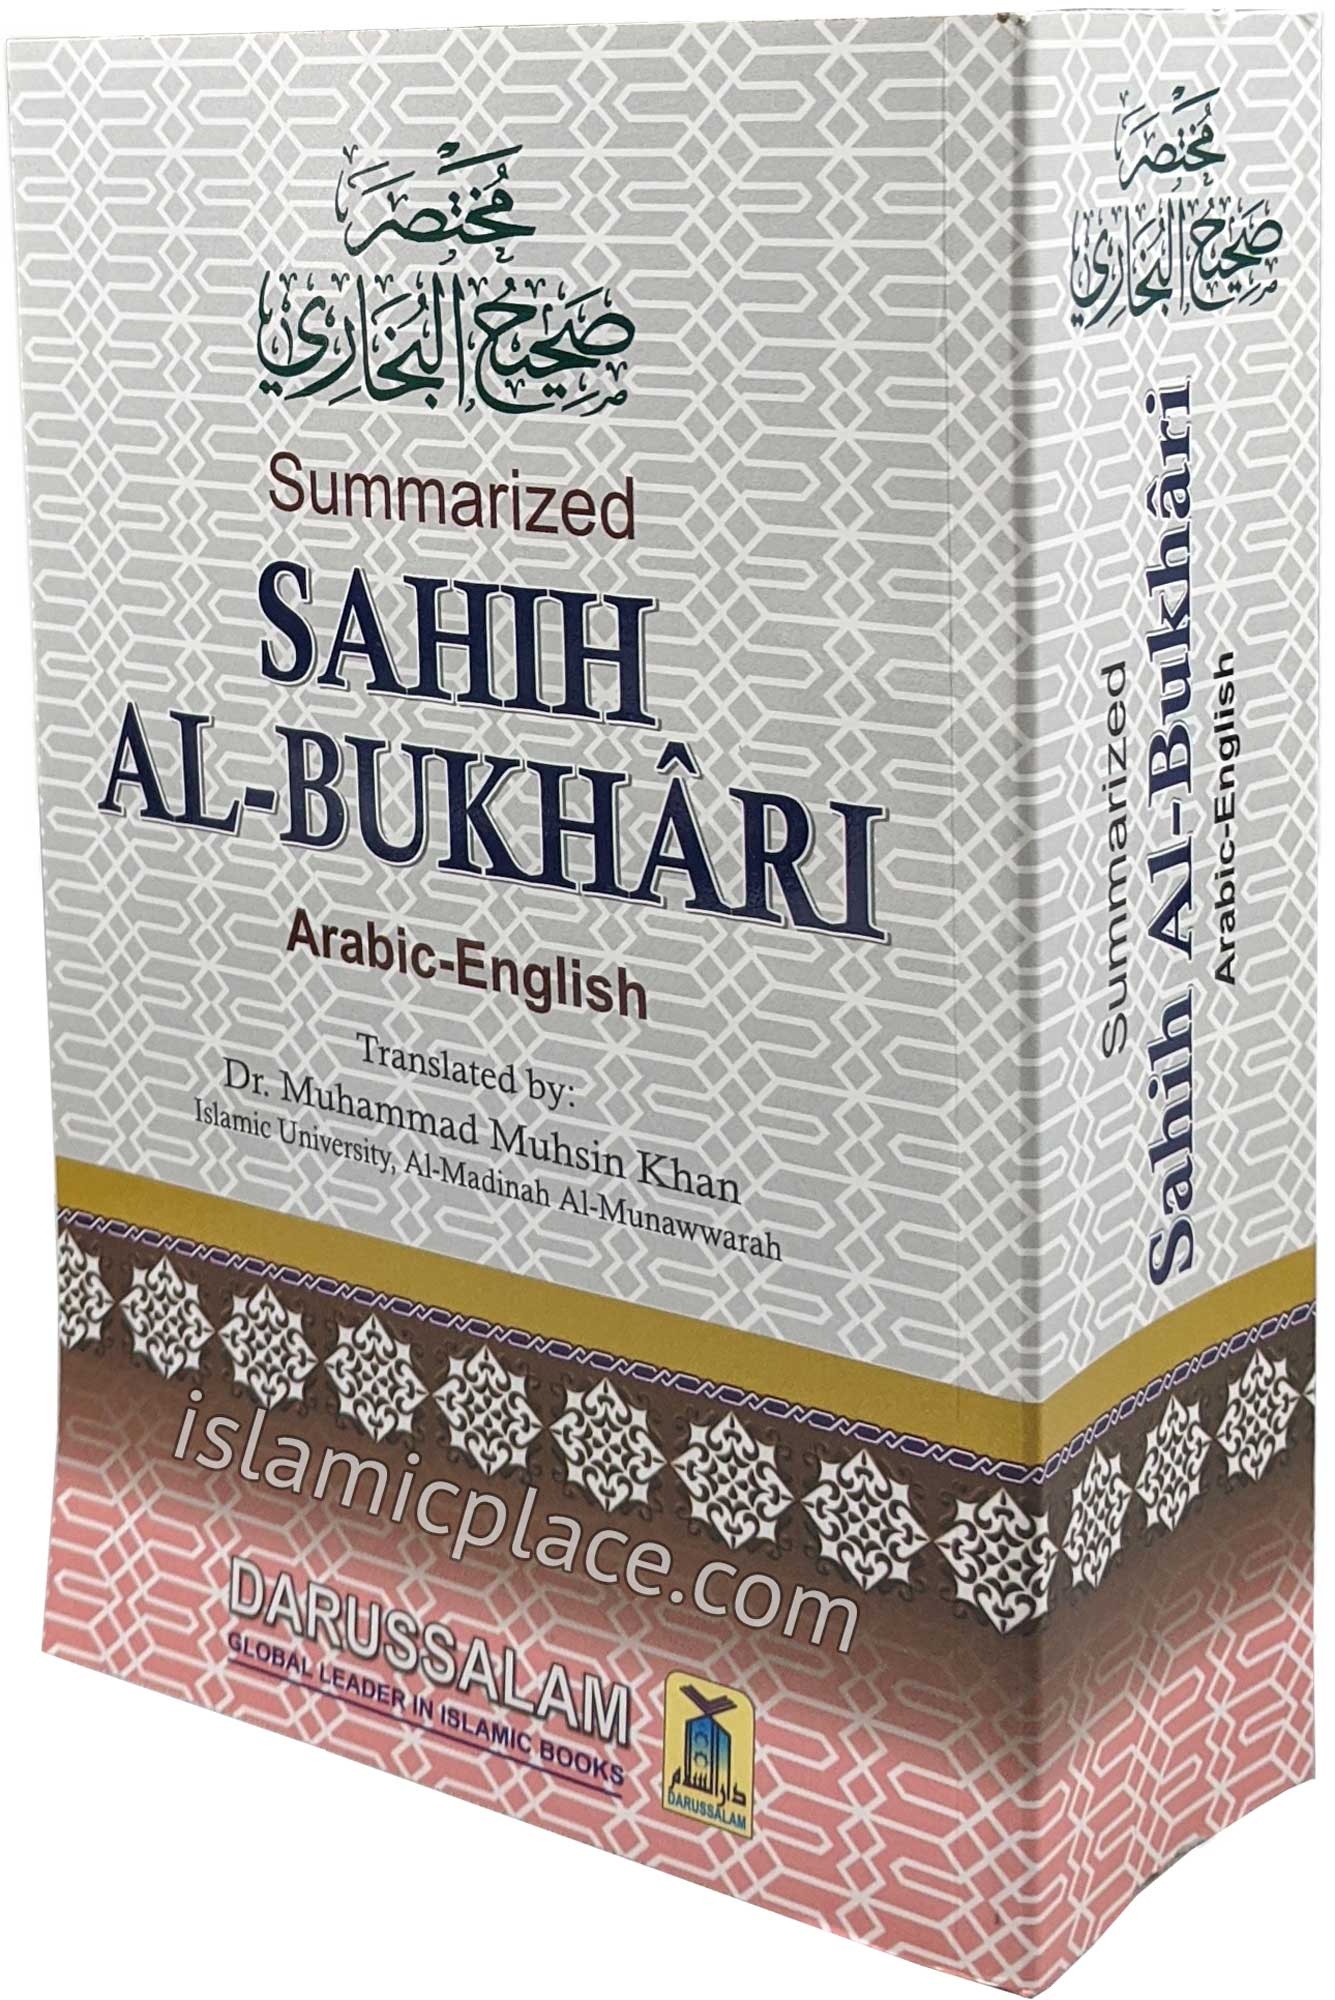 Summarized Sahih Al-Bukhari (Medium Paperback) approx 5" x 7"